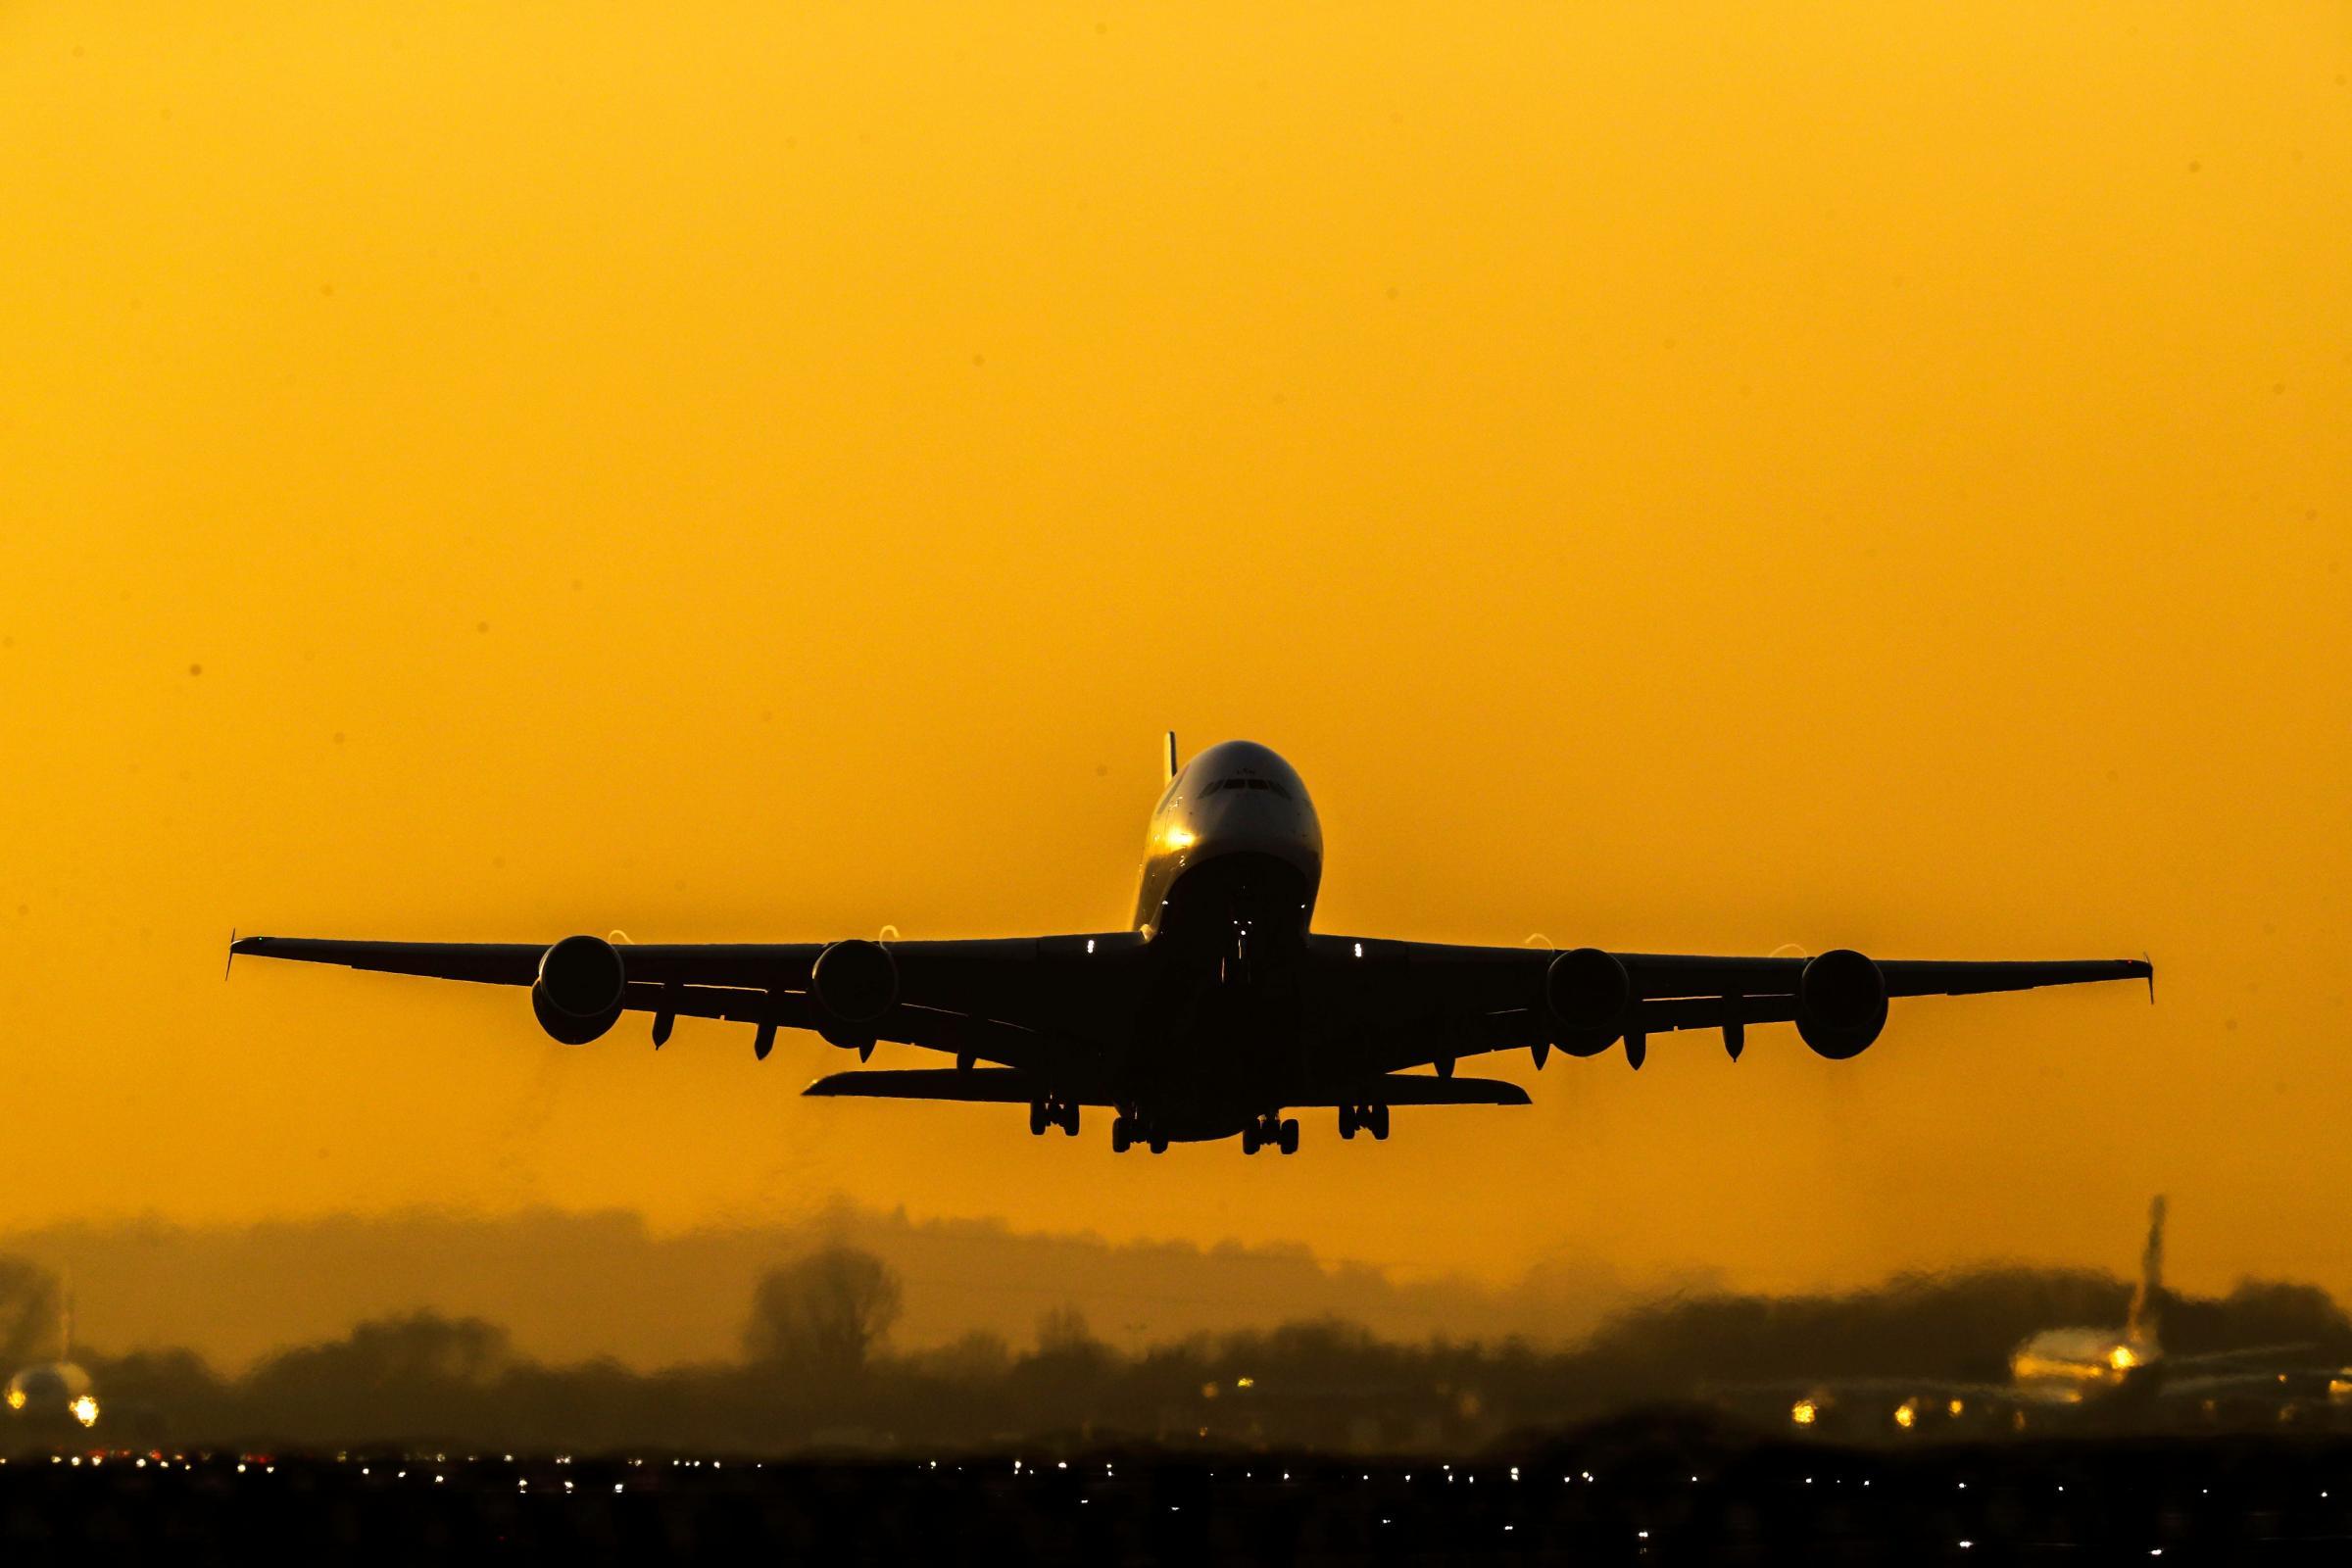 Stock image of an aeroplane taking off